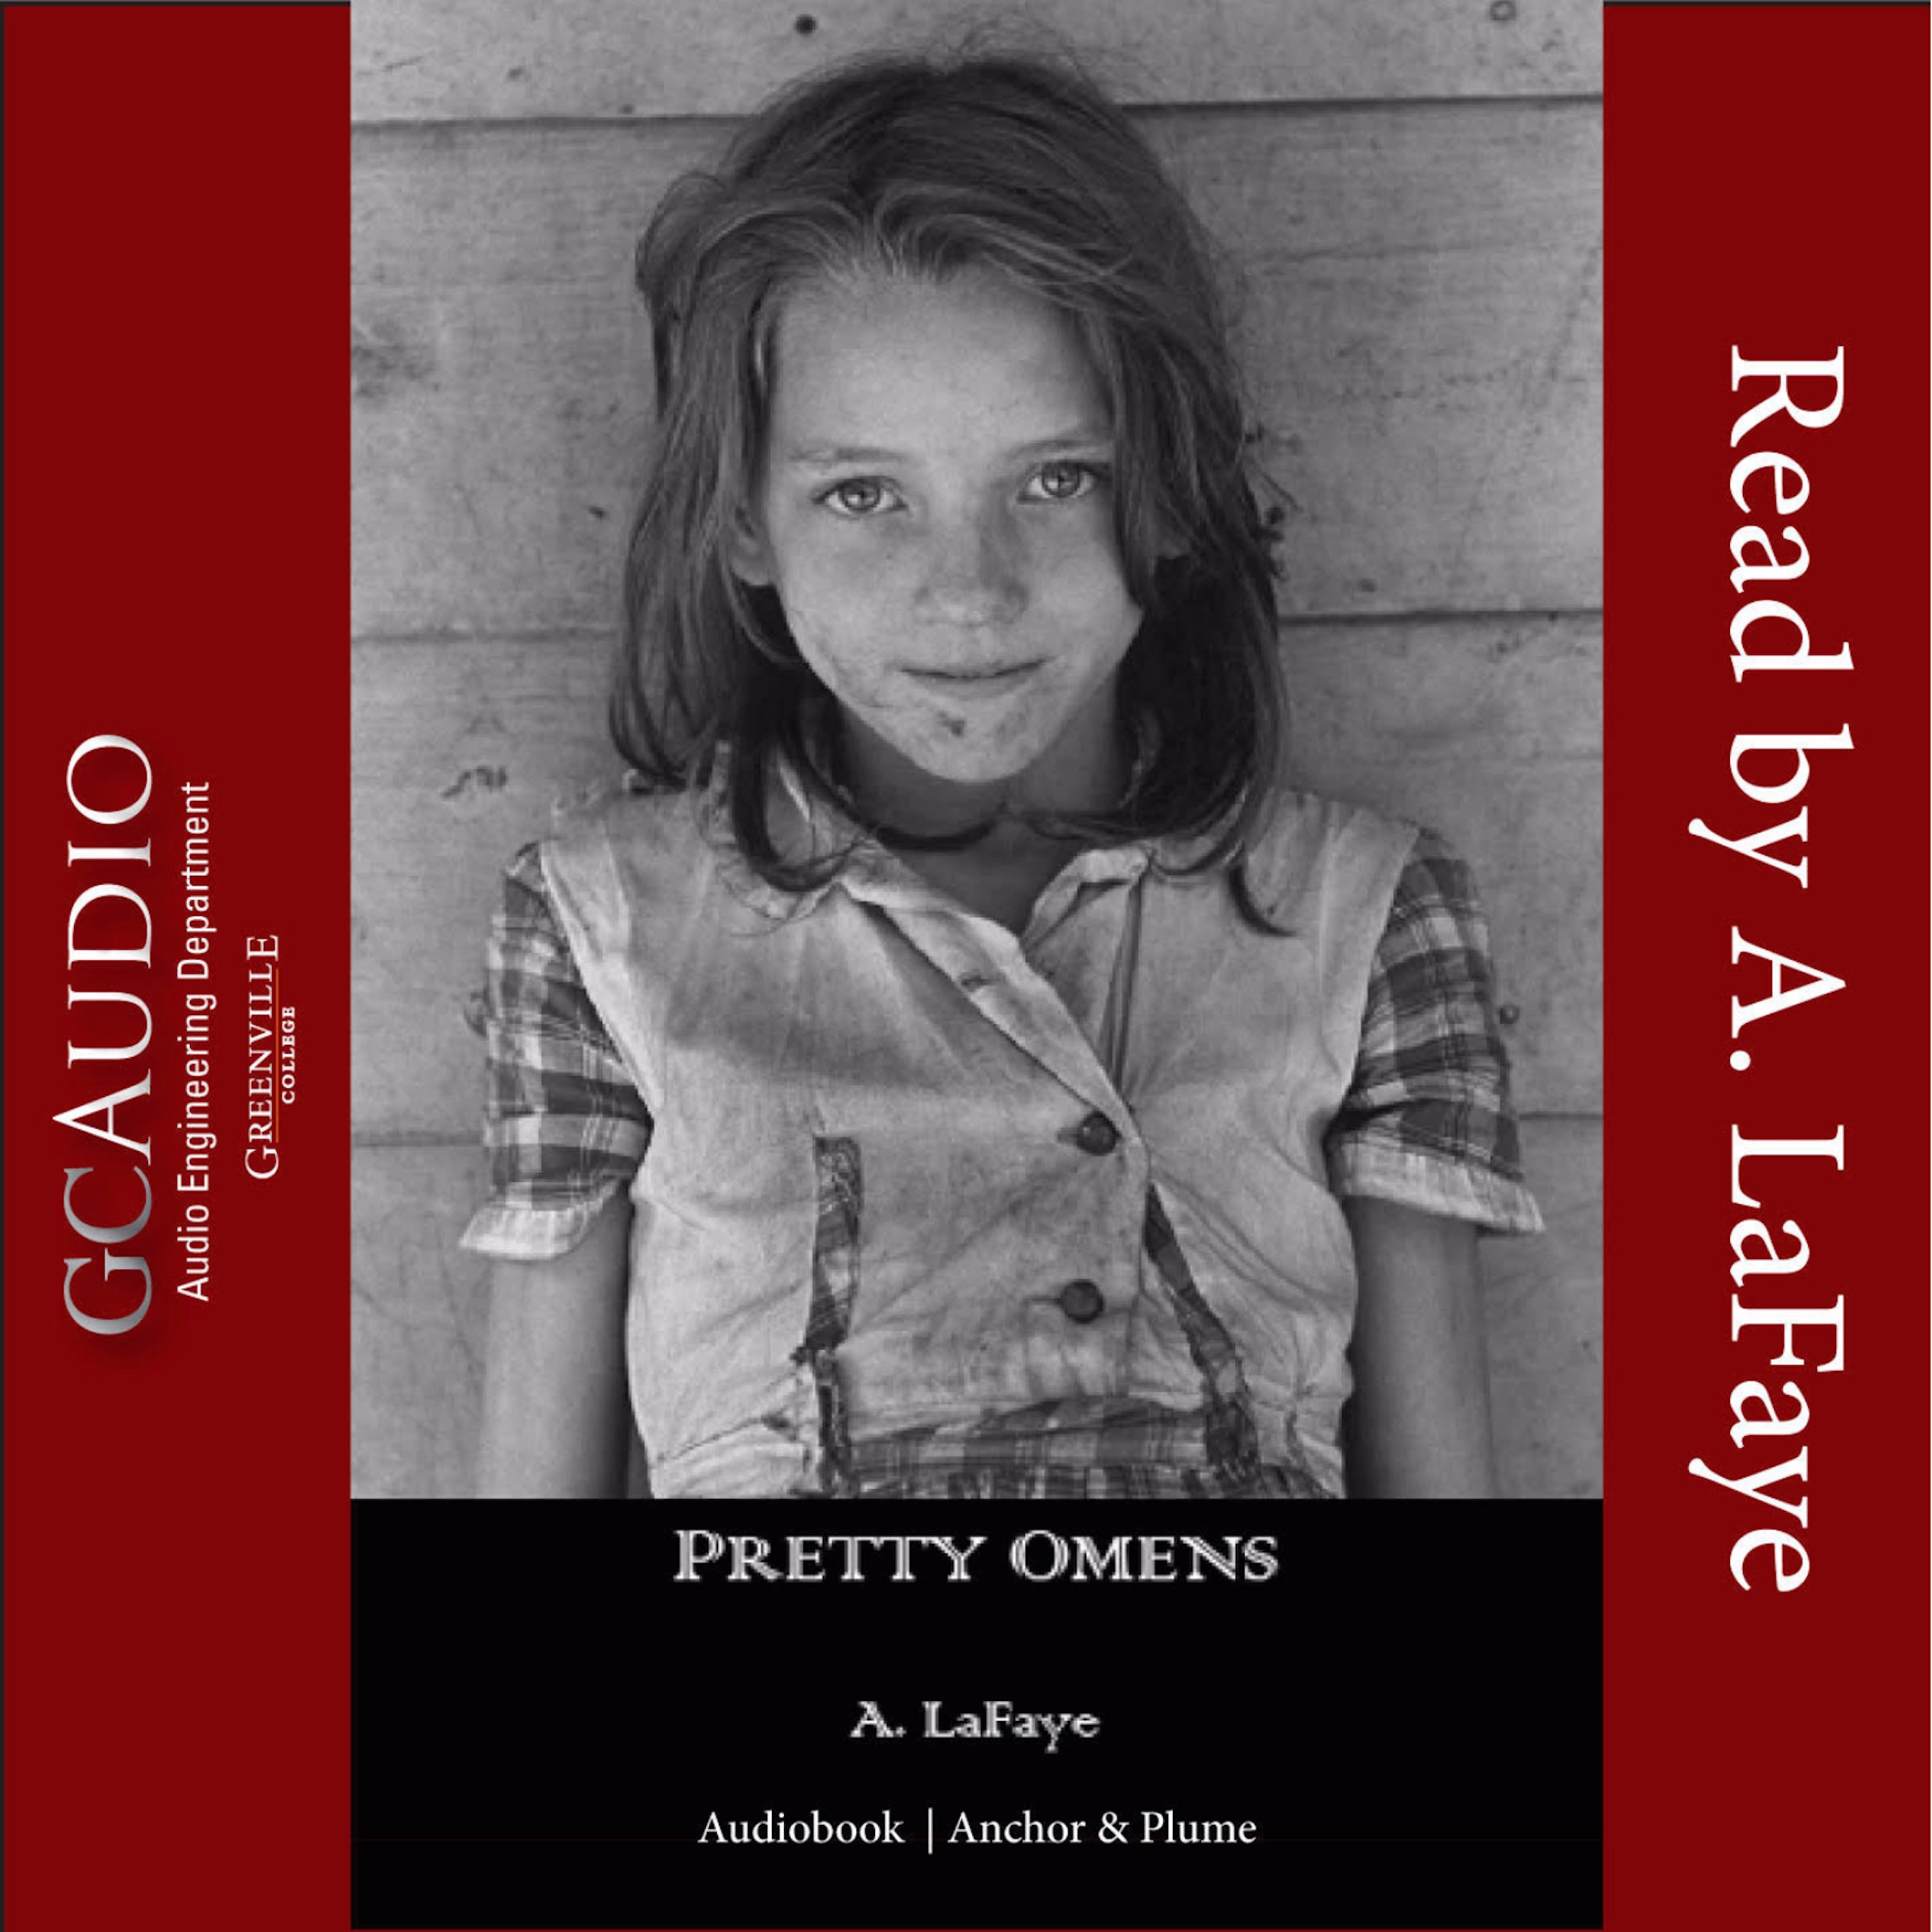 Pretty Omens Audiobook by A. LaFaye